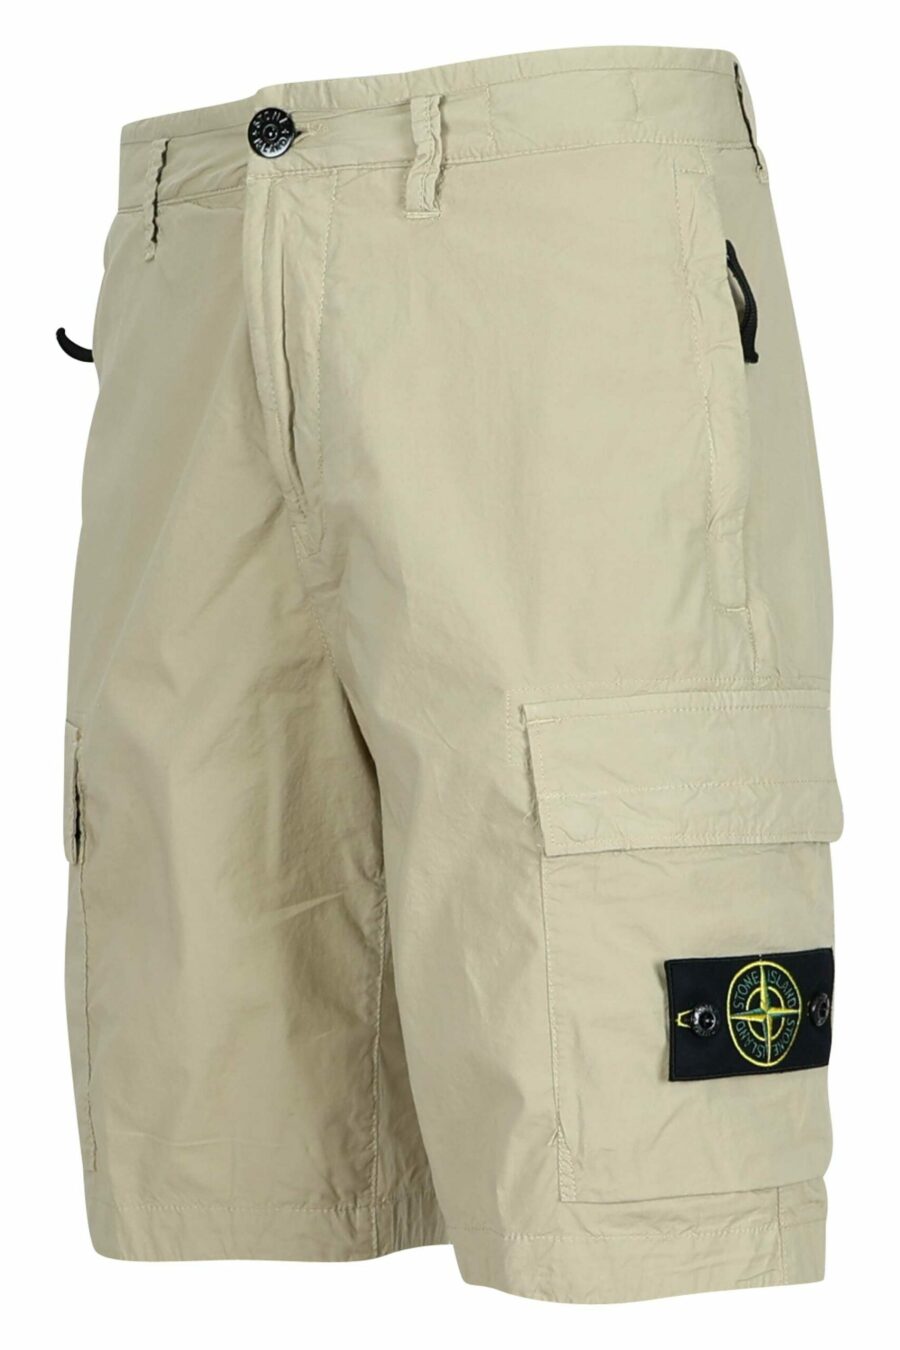 Pantalón corto color arena estilo cargo con logo parche brújula - 8052572916298 1 scaled